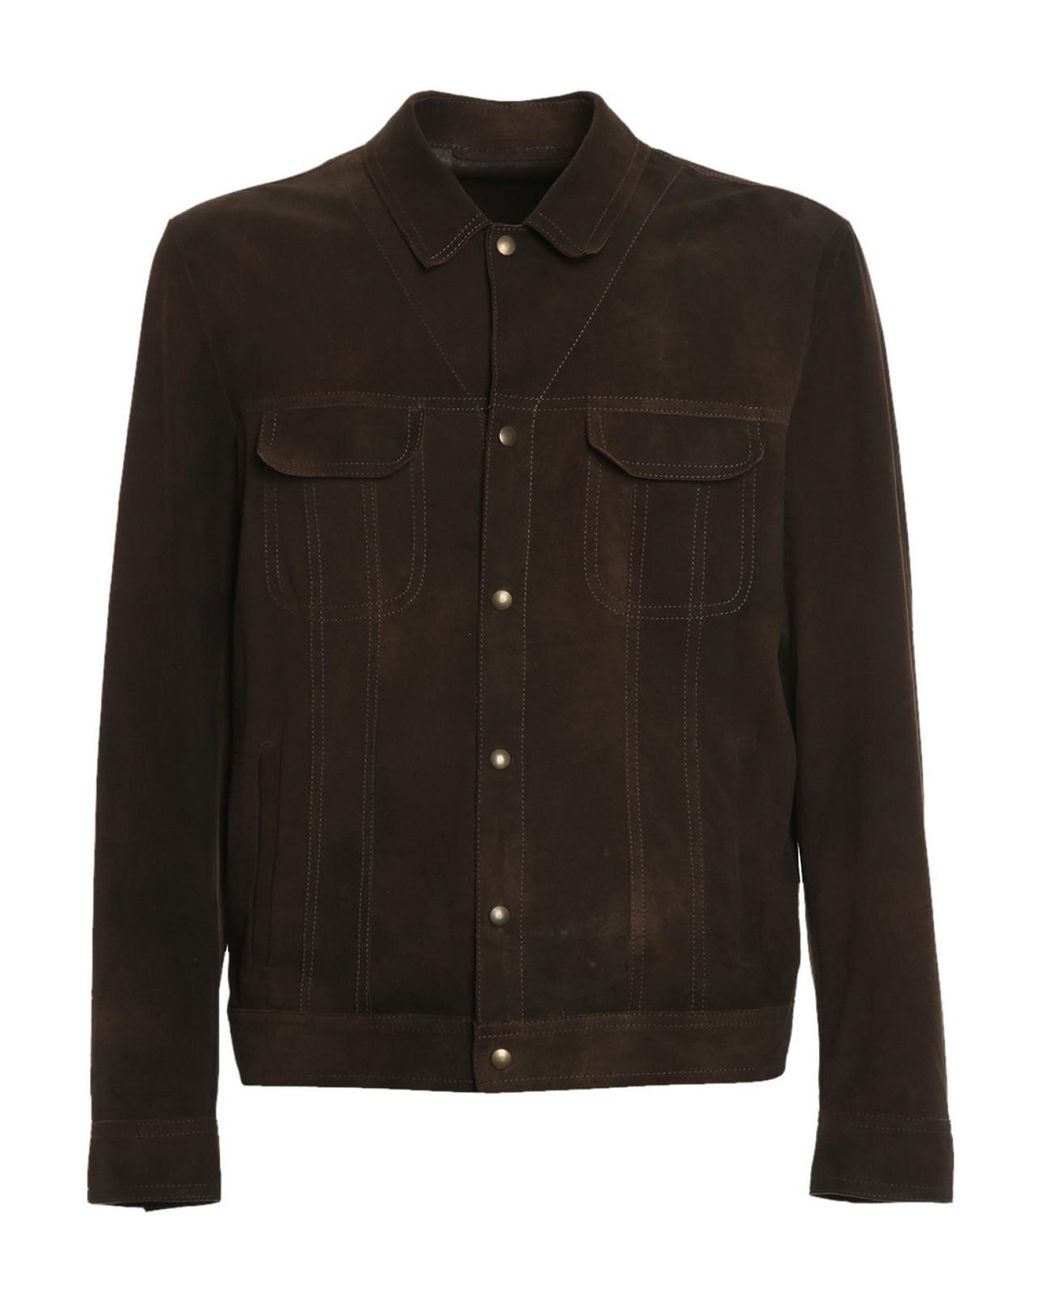 Salvatore Santoro Suede Shirt-jacket in Dark Brown (Brown) for Men - Lyst